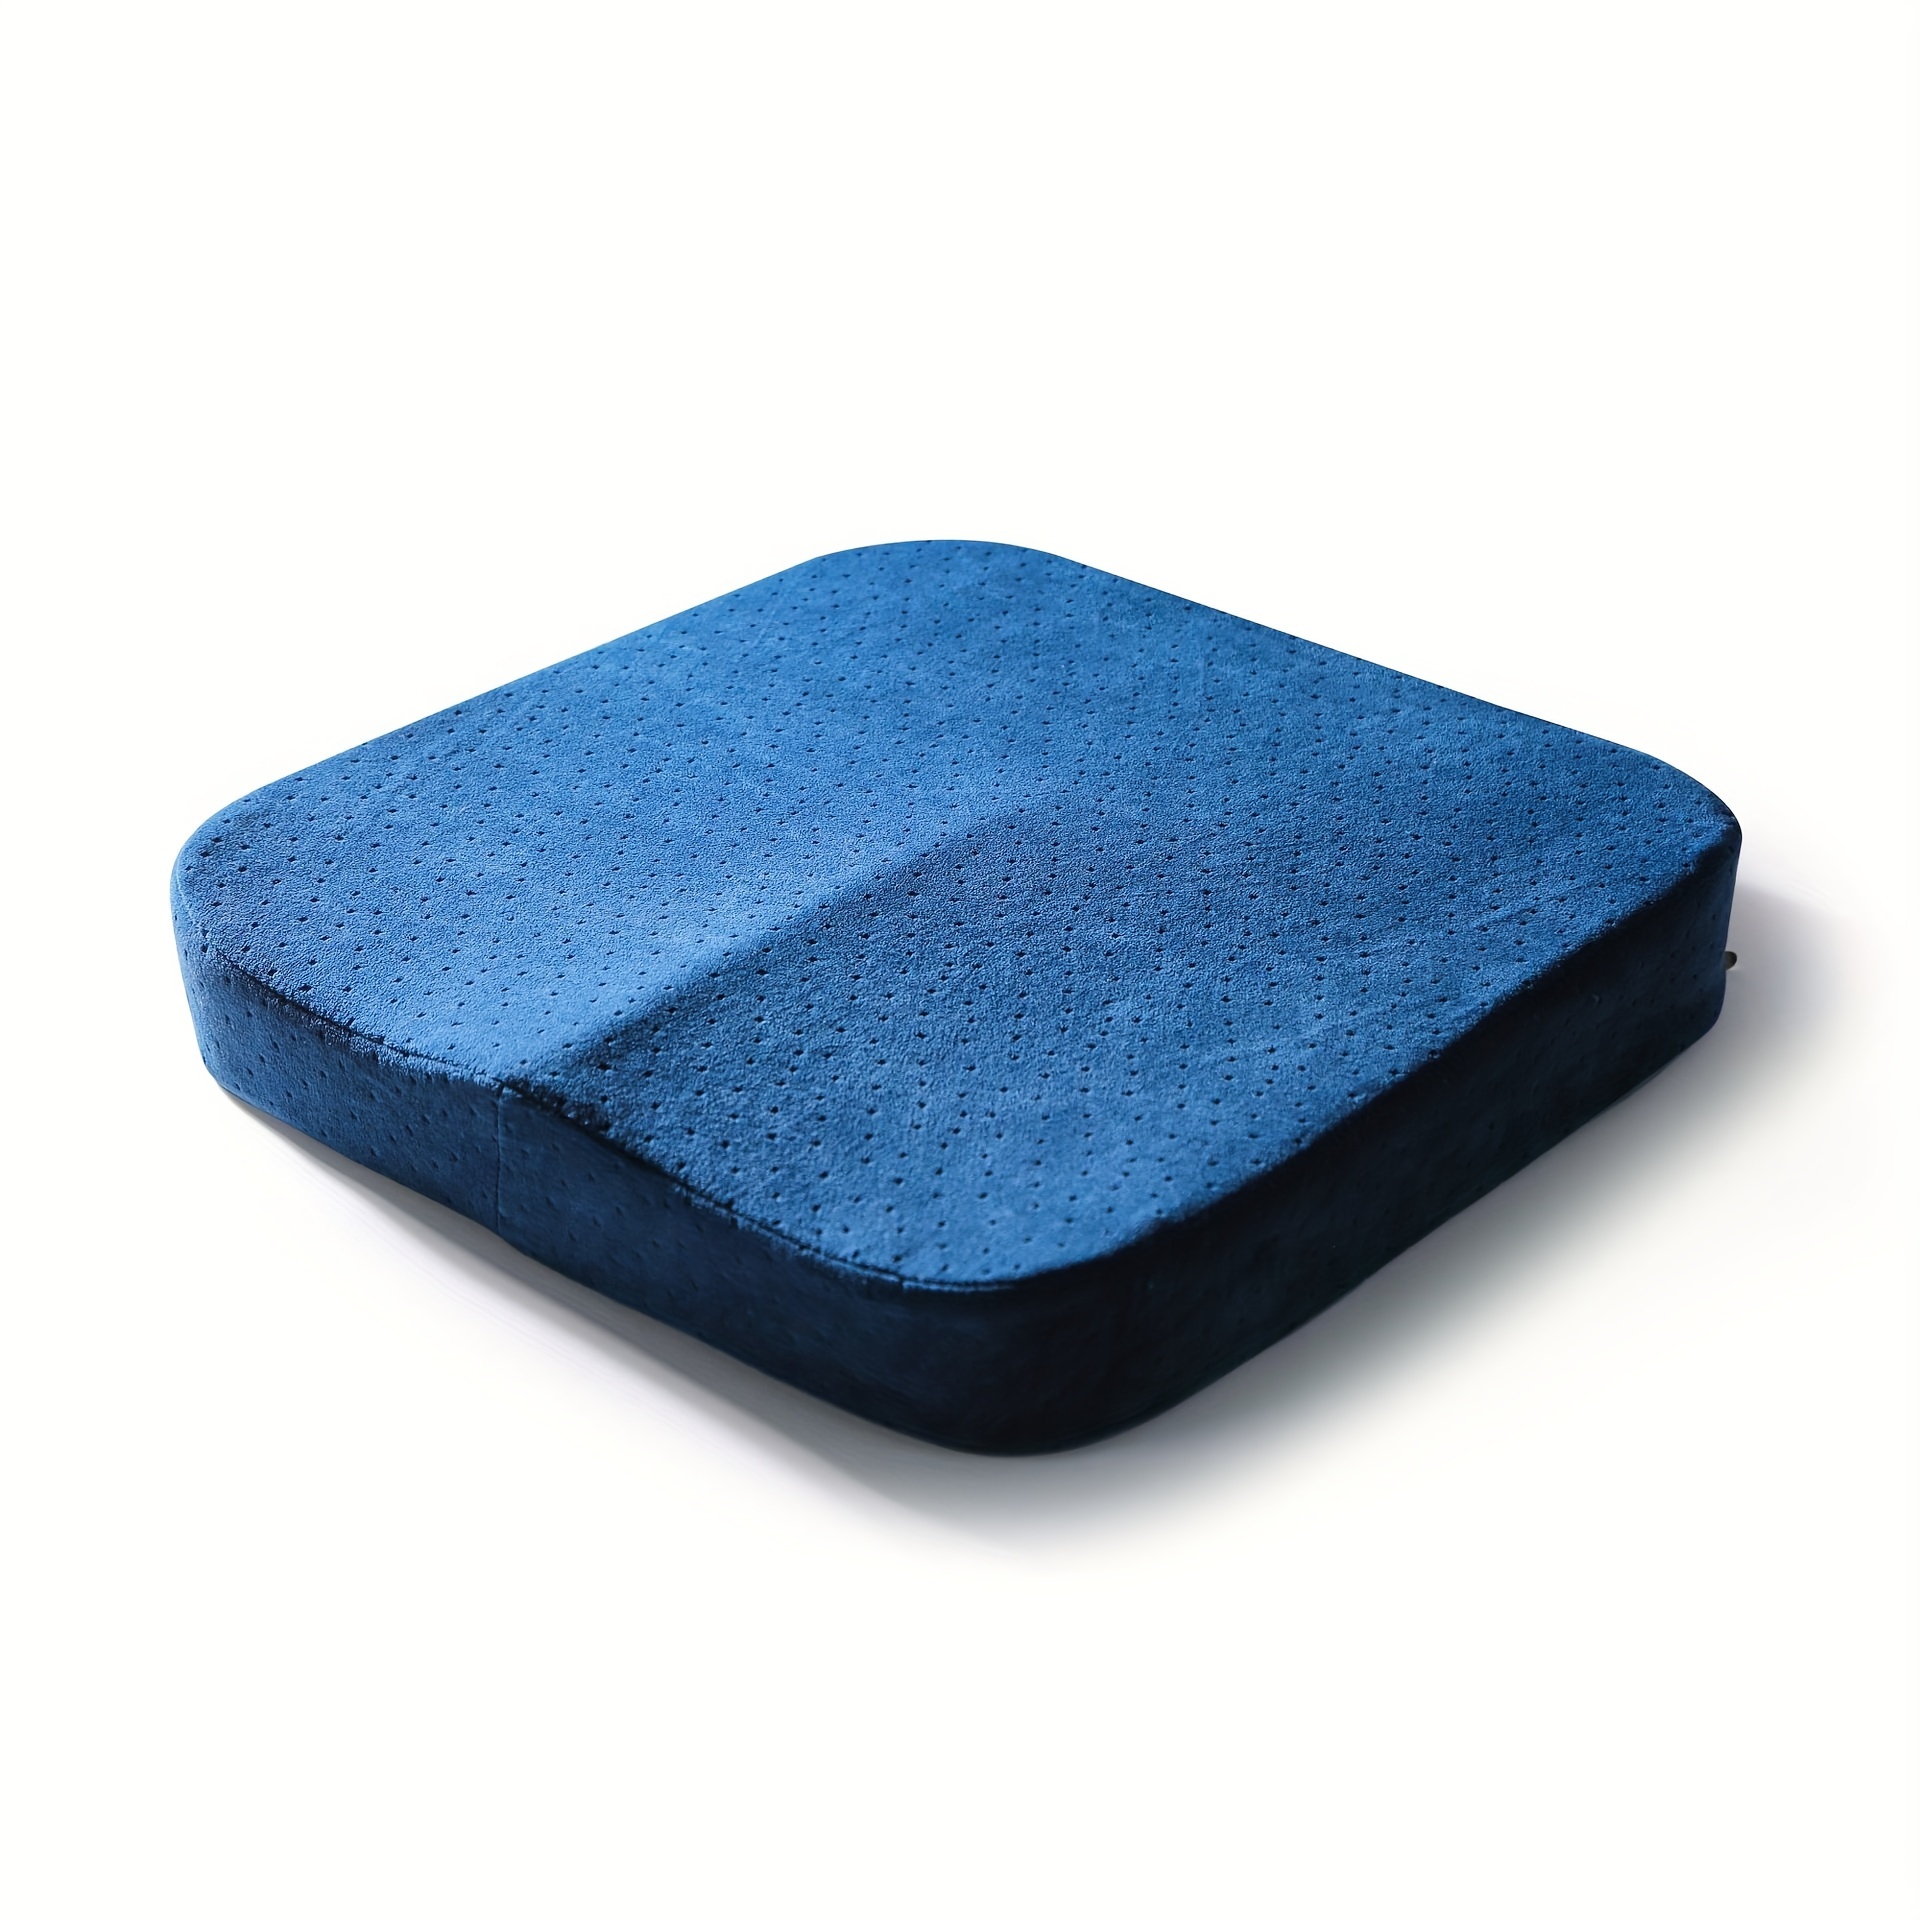 2.2kgs/4.85lbs Broken Memory Foam Pillow Cushion Chair Replacement